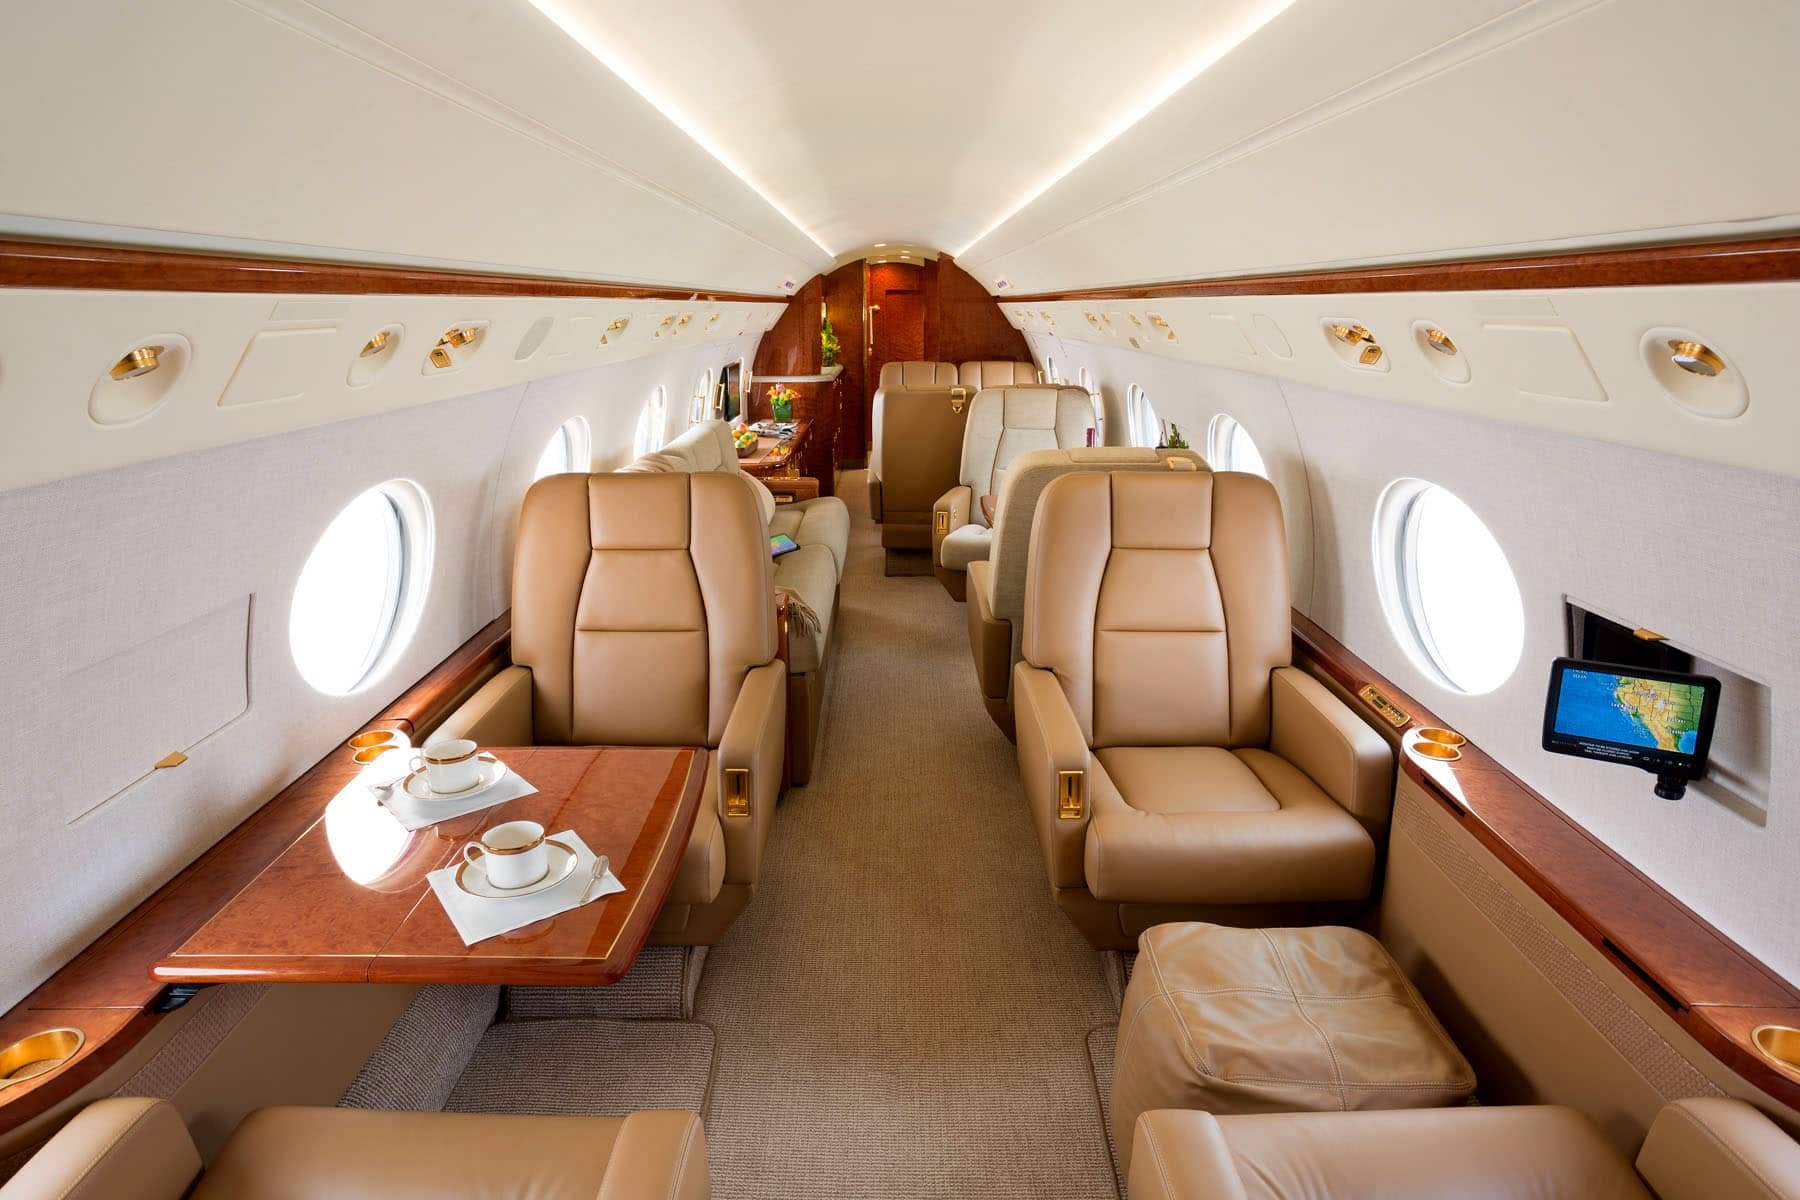 Как выглядит салон самолета бизнес класса фото